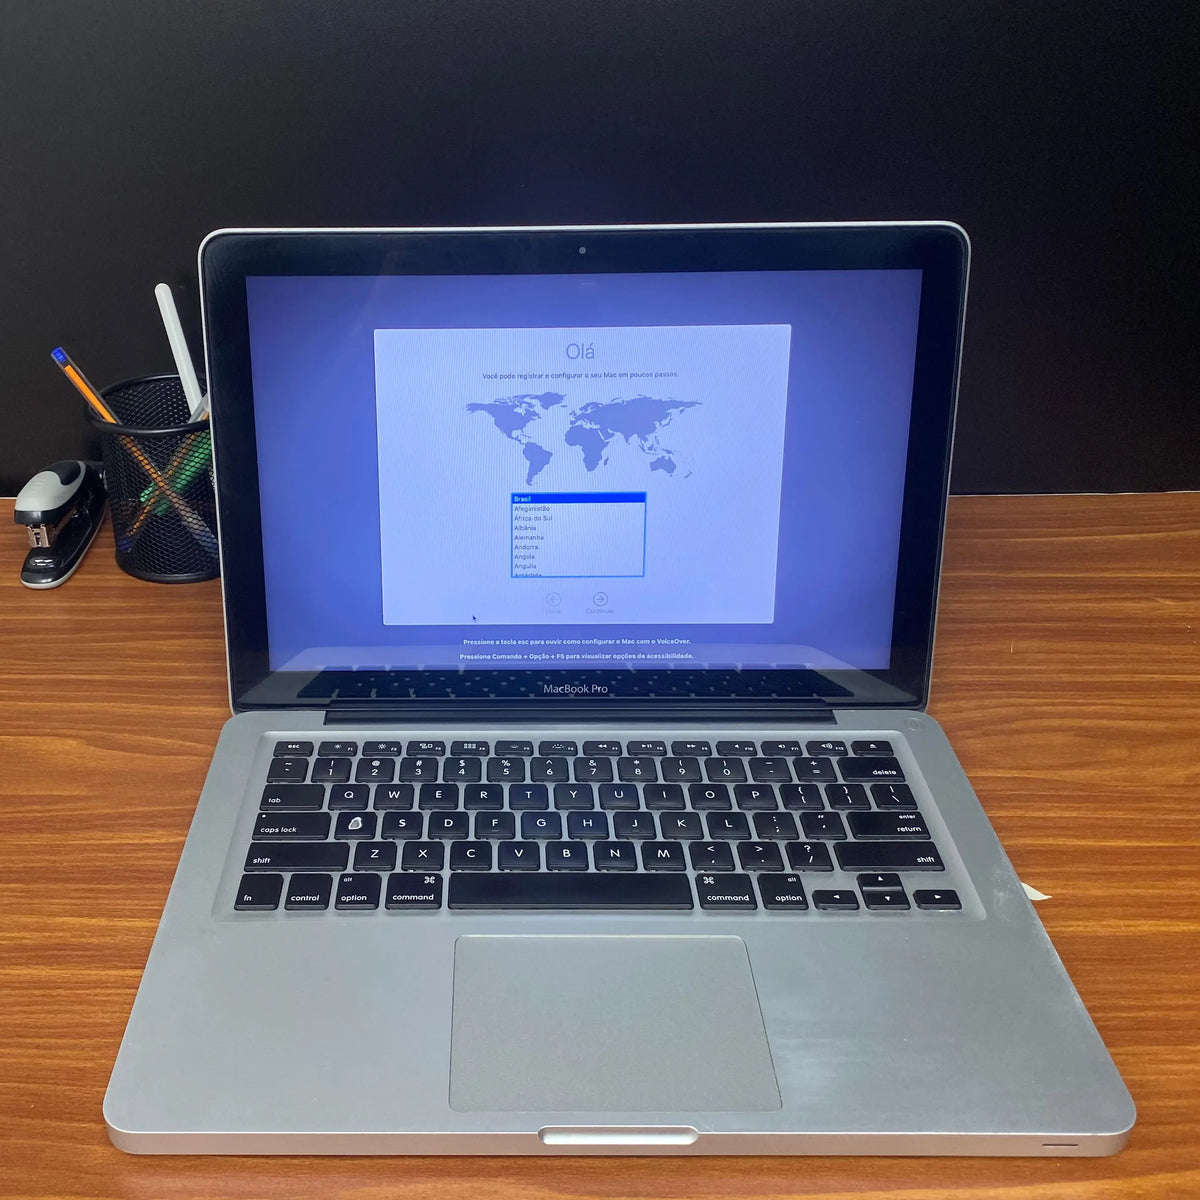 Comprar MacBook Pro usado - Macbook Pro 13 i5 Mid-2012 MD101LL/A - TrocaTech Seminovos